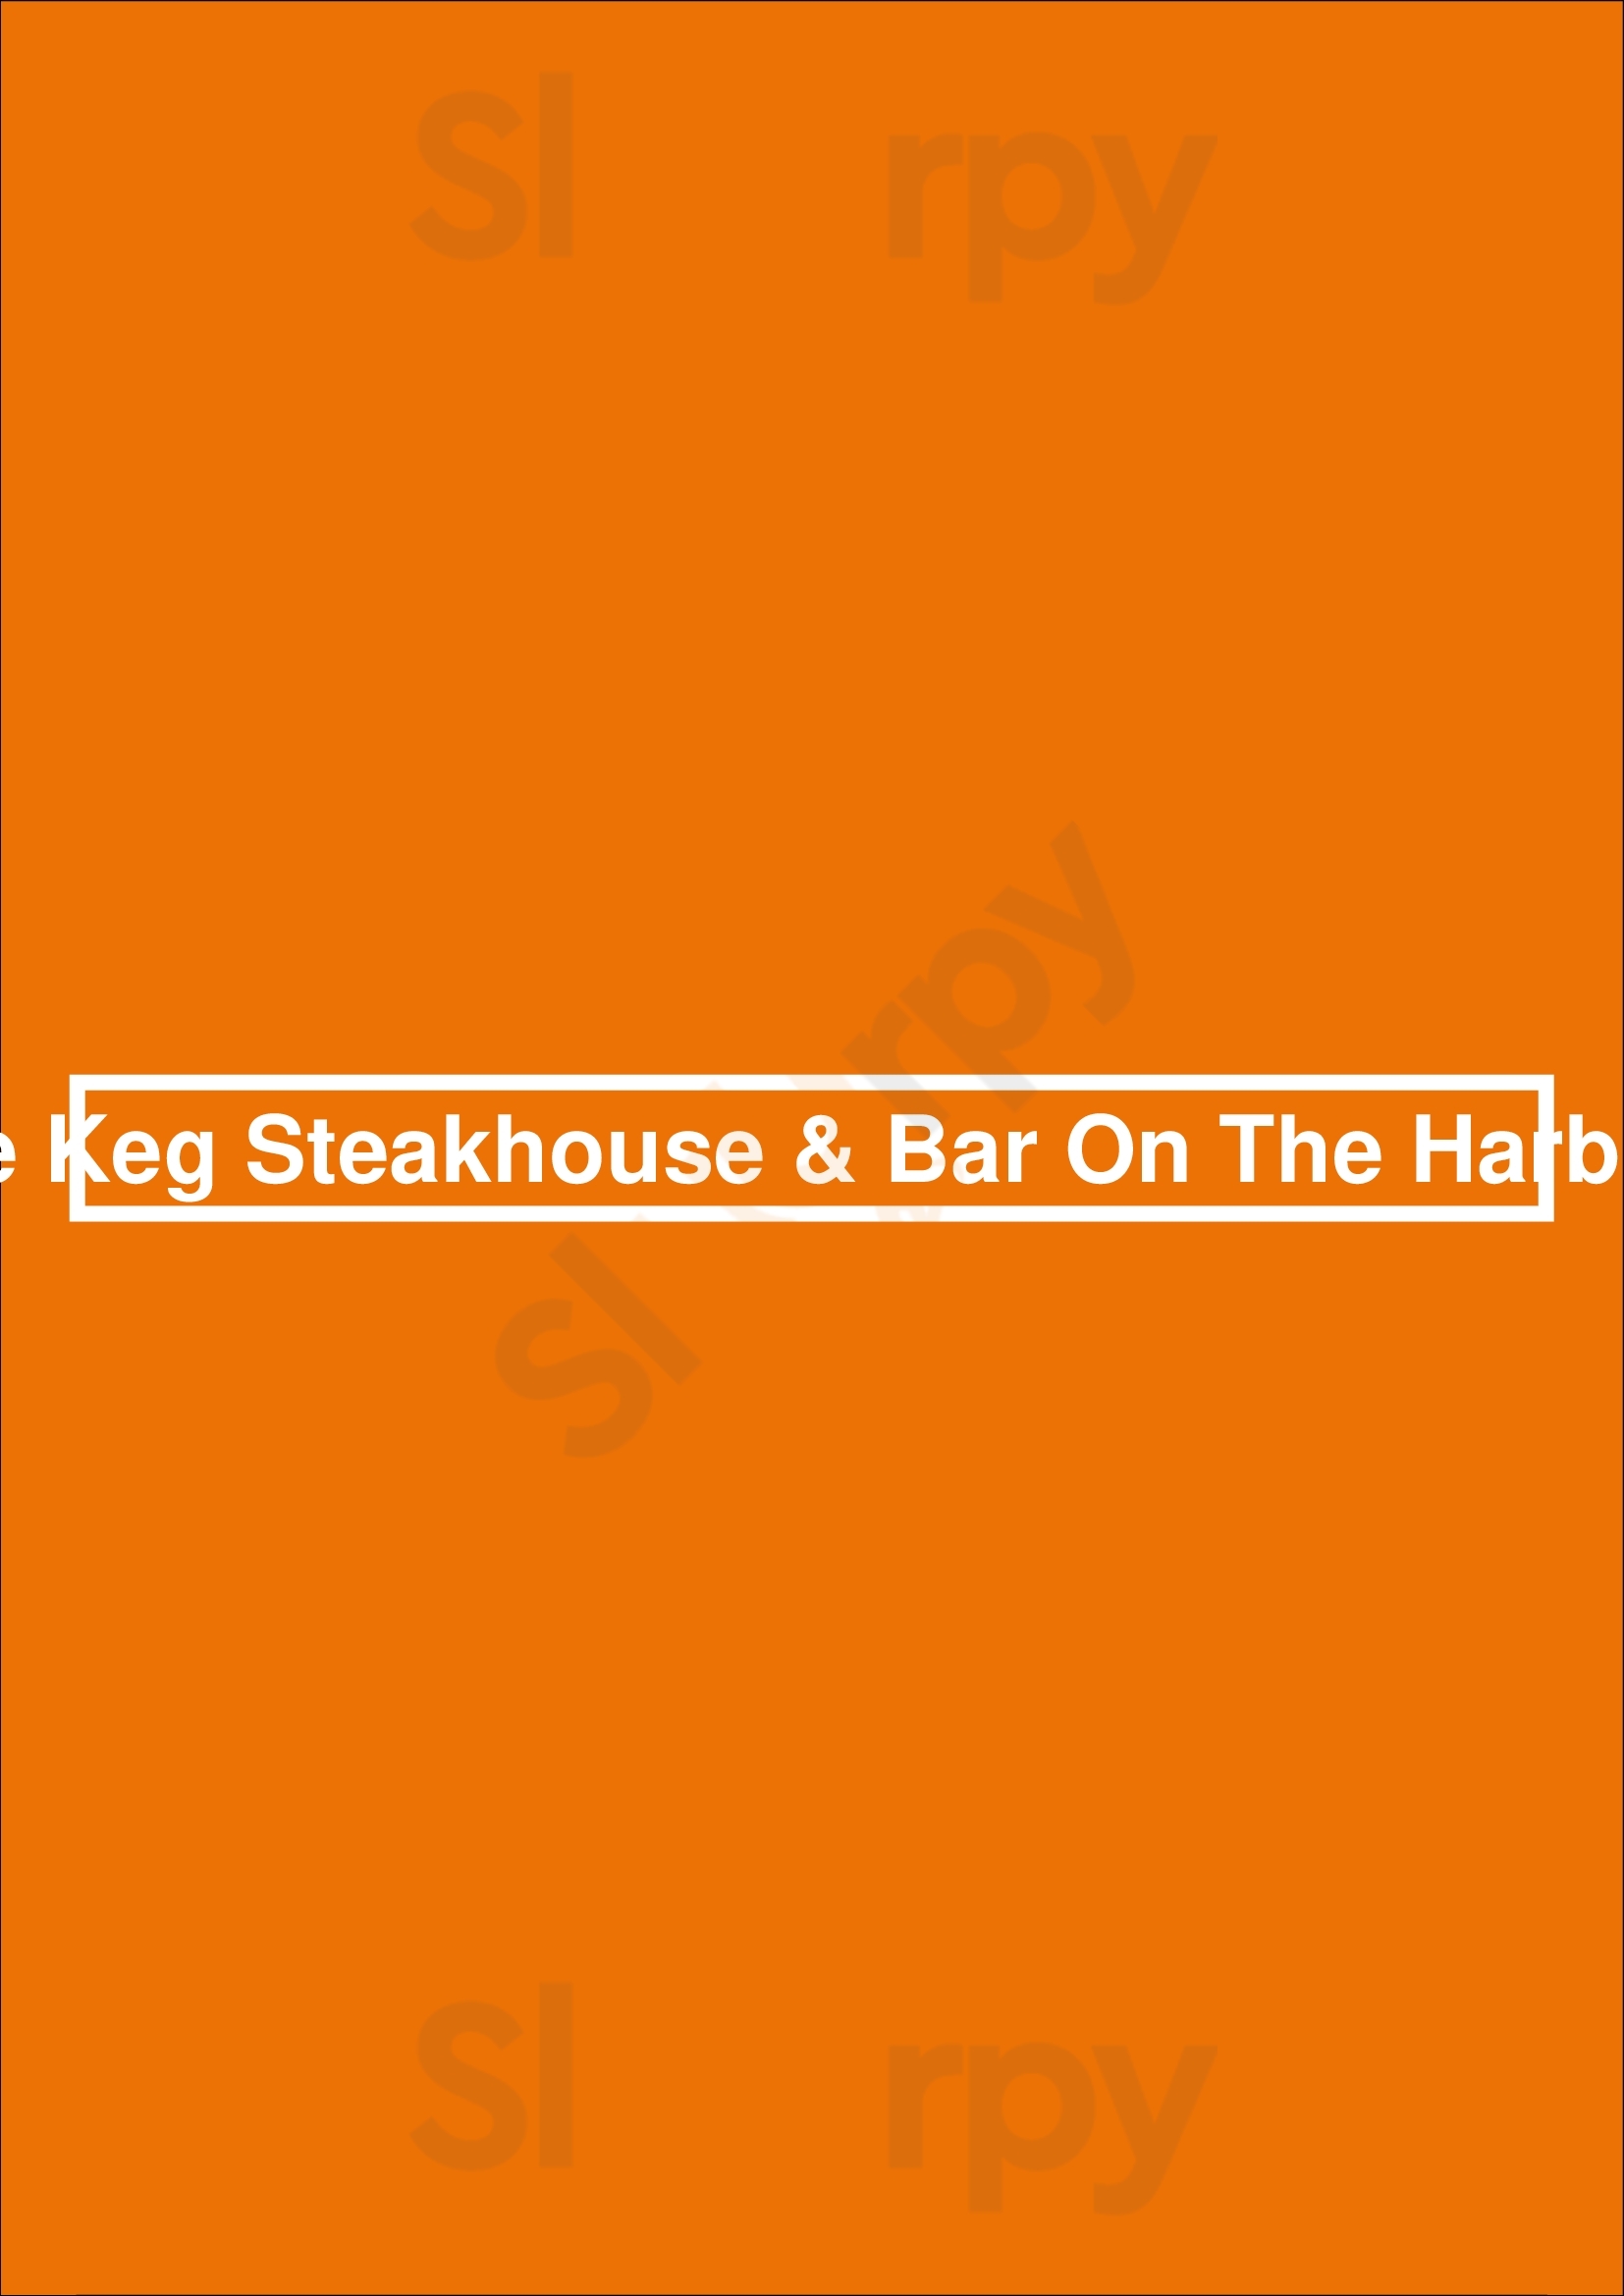 The Keg Steakhouse + Bar - Fort Street Victoria Menu - 1